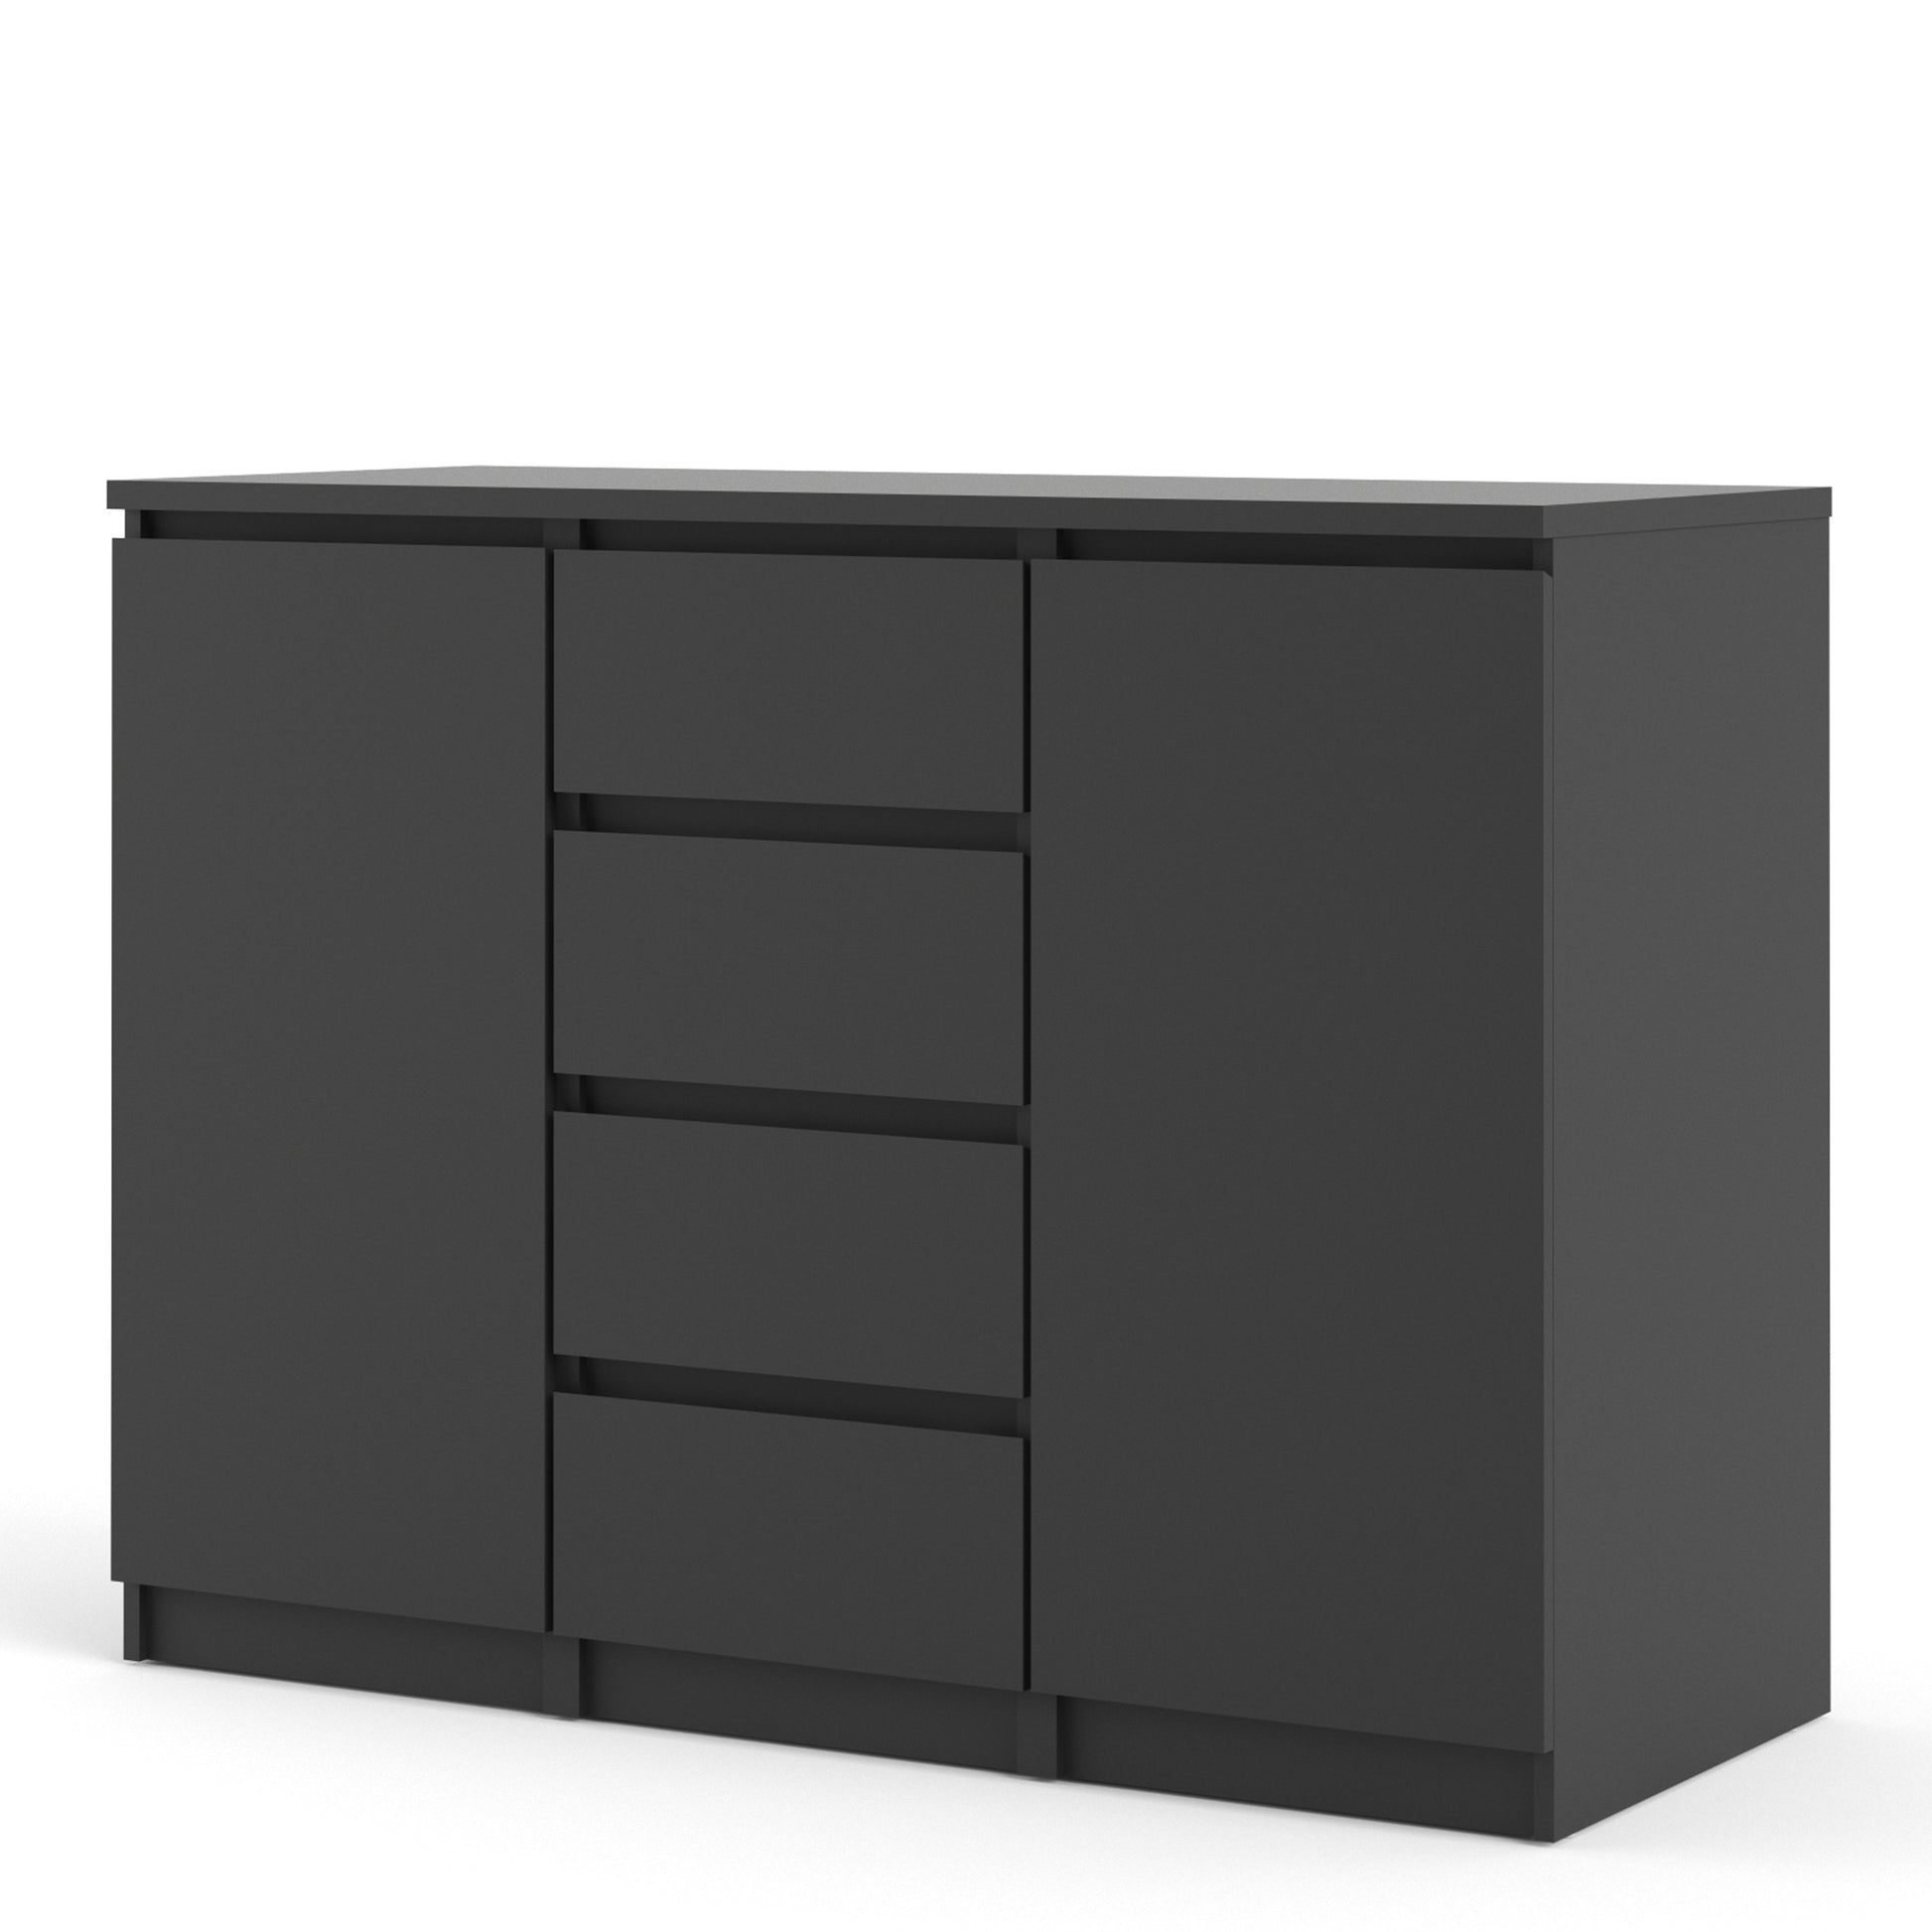 Naia  Sideboard - 4 Drawers 2 Doors in Black Matt